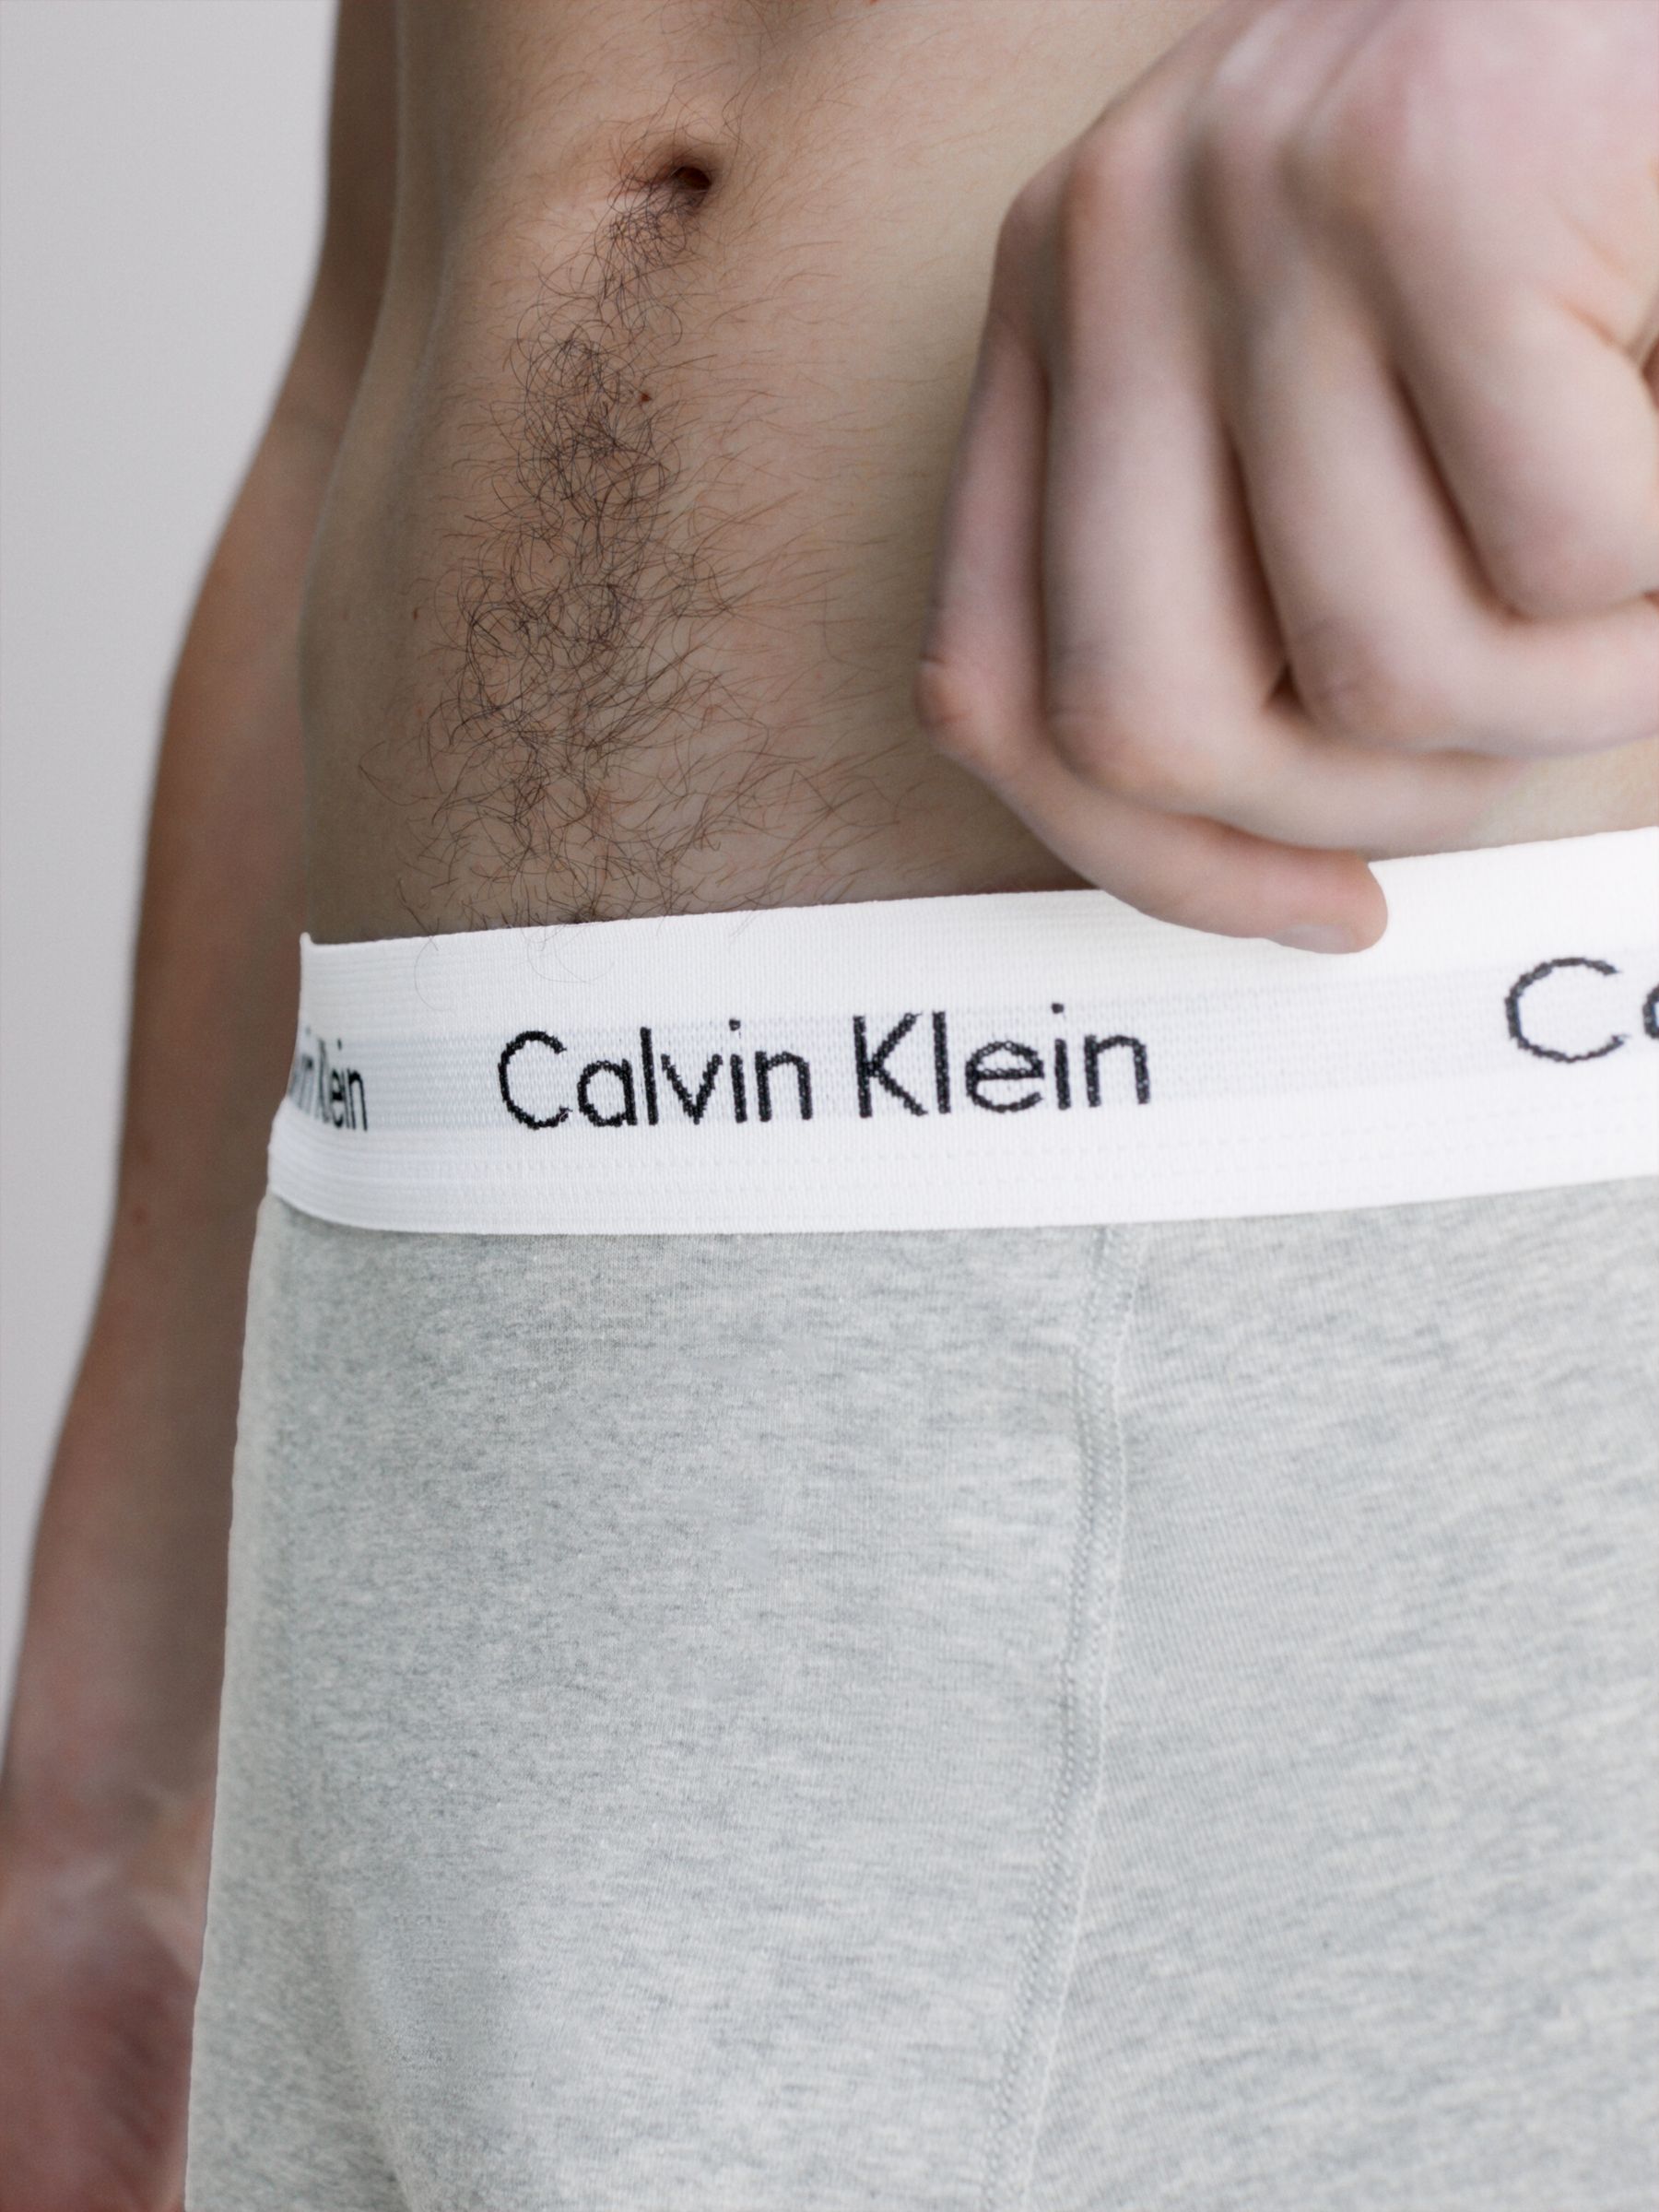 Is aan het huilen parallel Reageren Calvin Klein Regular Cotton Stretch Trunks, Pack of 3, Black/White/Grey  Heather at John Lewis & Partners